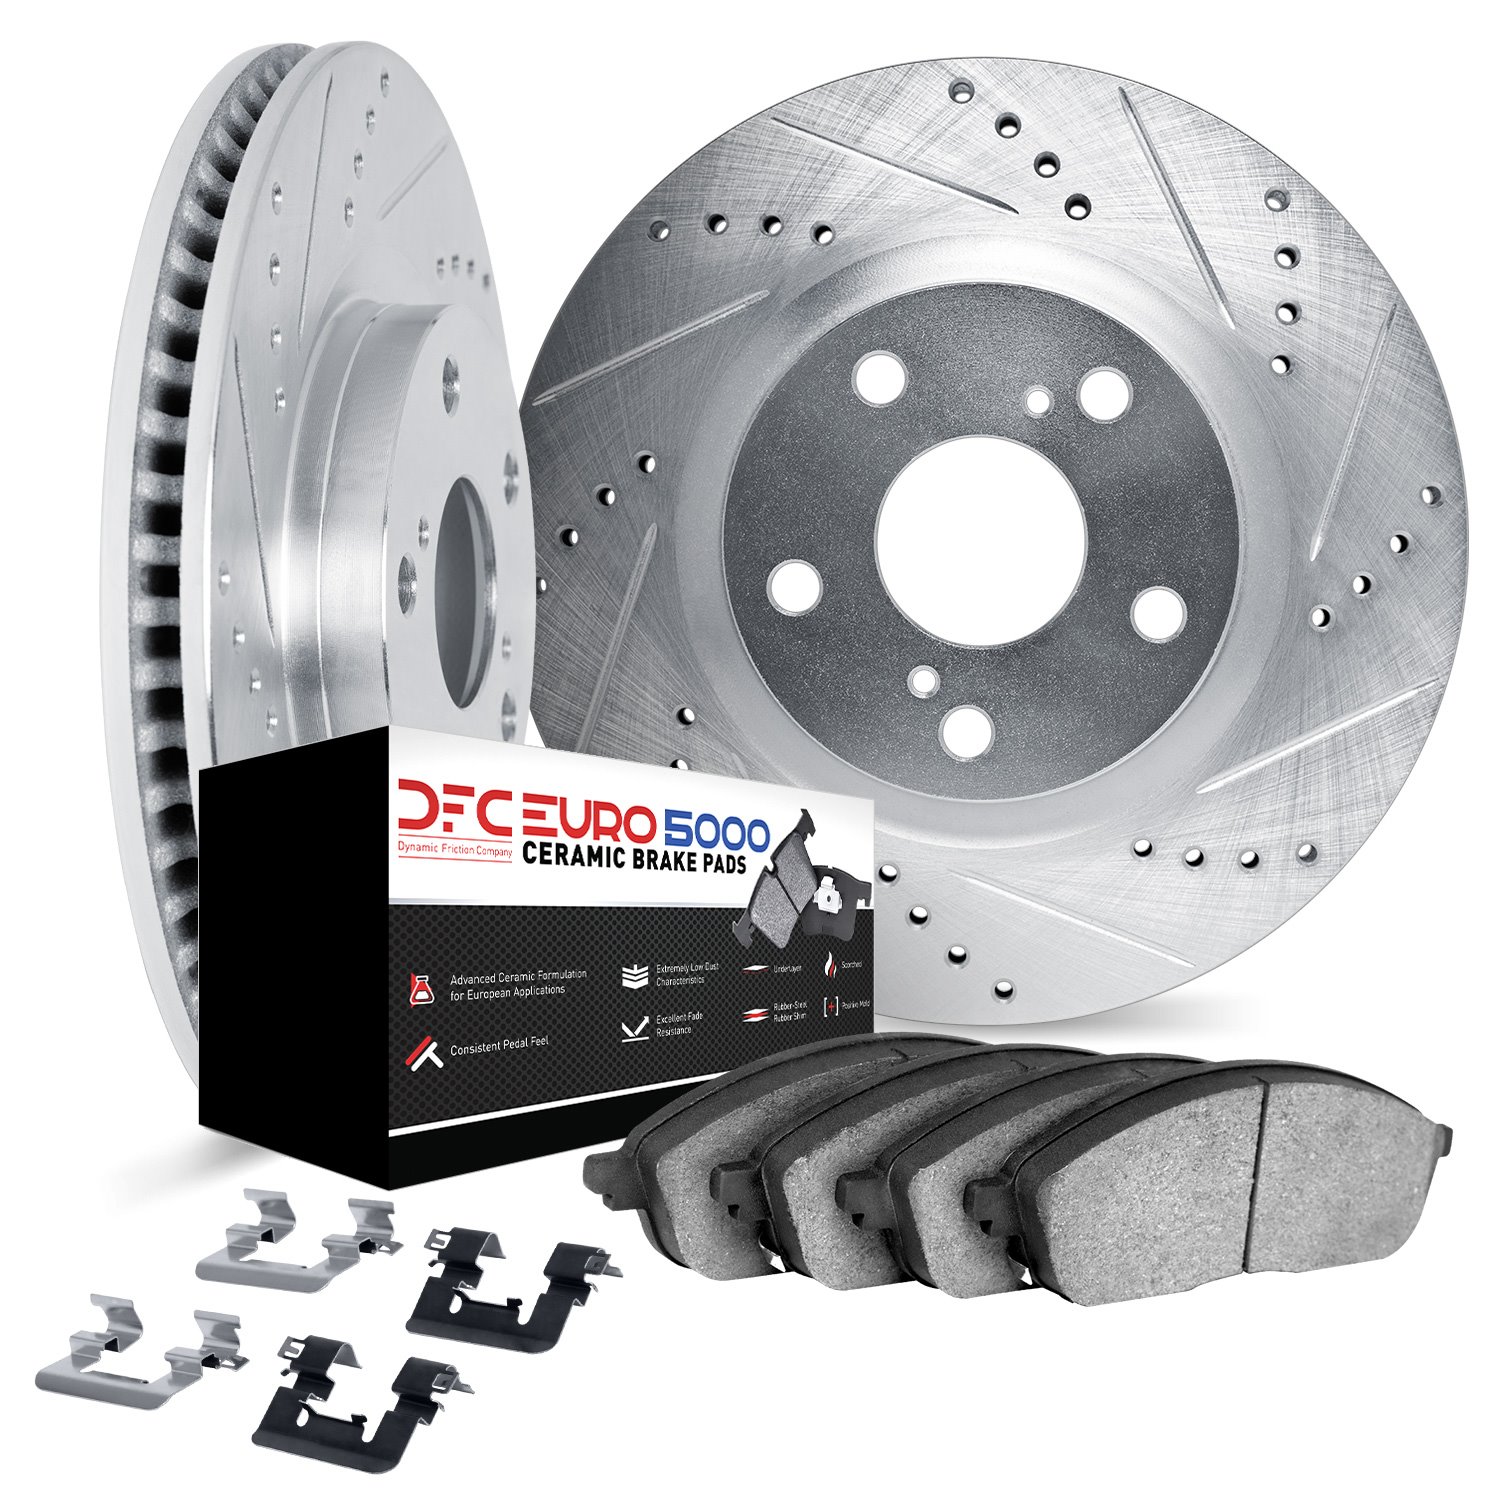 7612-73063 Drilled/Slotted Brake Rotors w/5000 Euro Ceramic Brake Pads Kit & Hardware [Silver], Fits Select Audi/Volkswagen, Pos